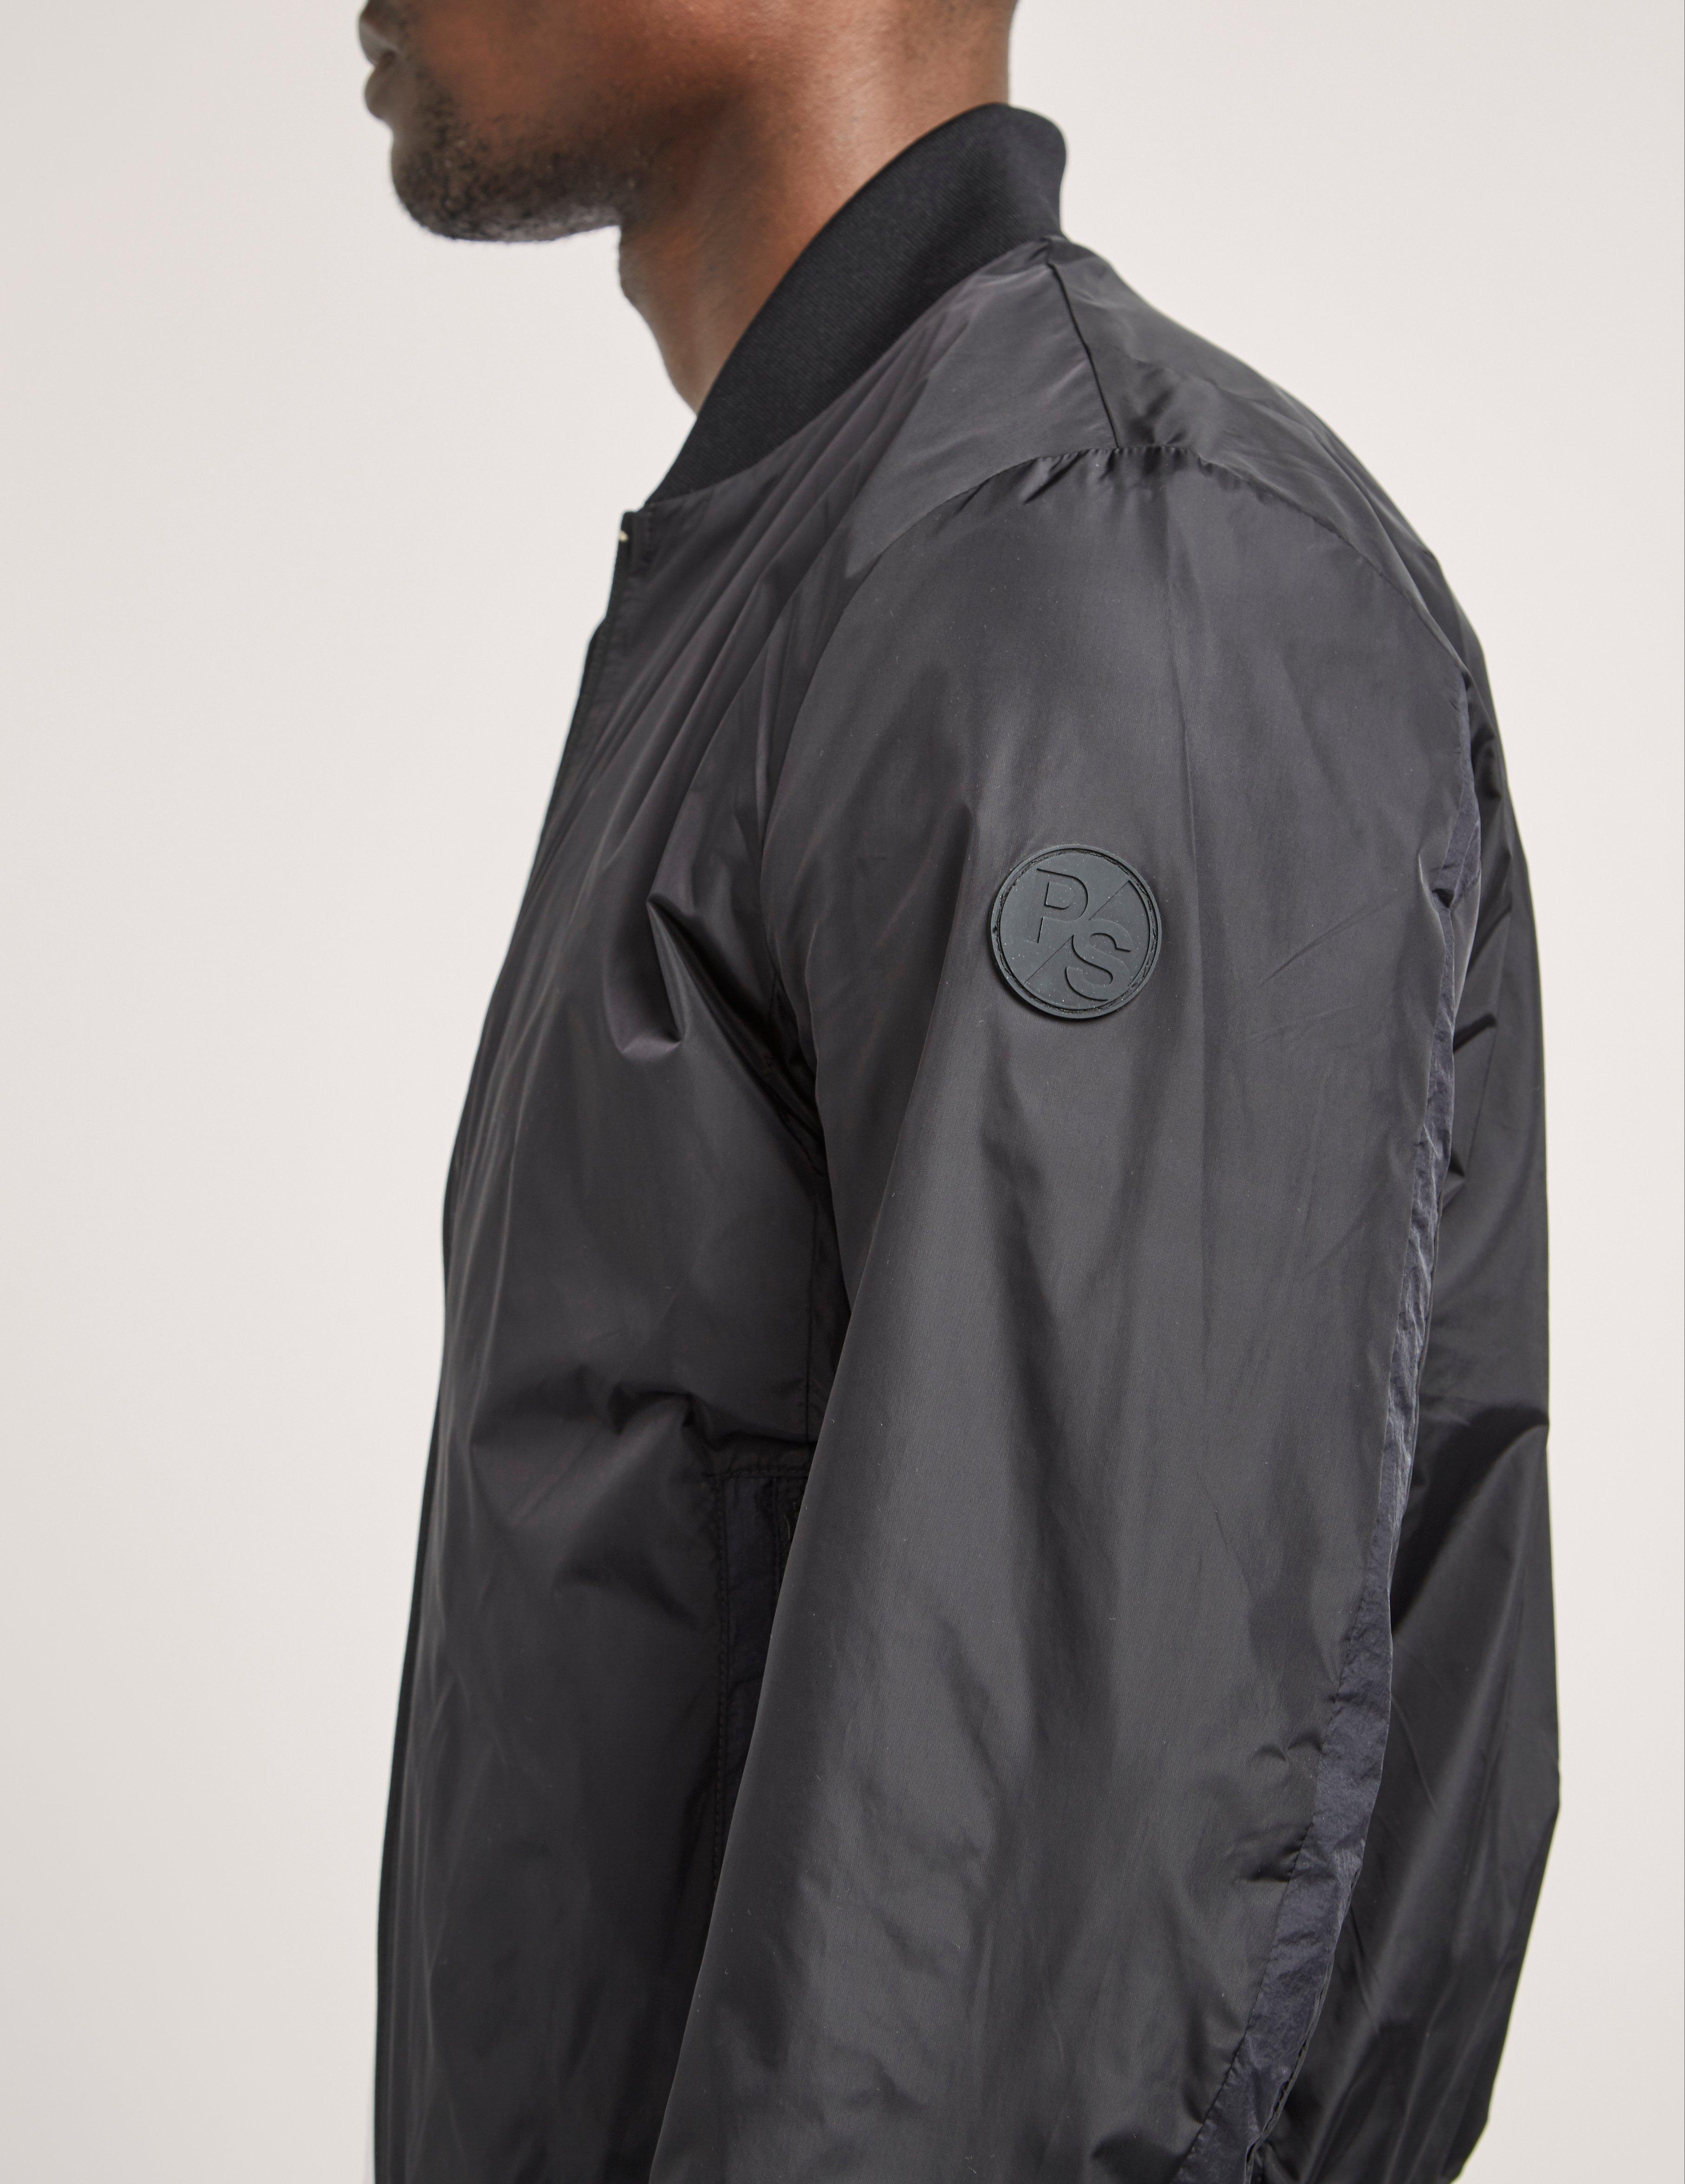 Paul Smith Synthetic Nylon Bomber Jacket in Black for Men - Lyst